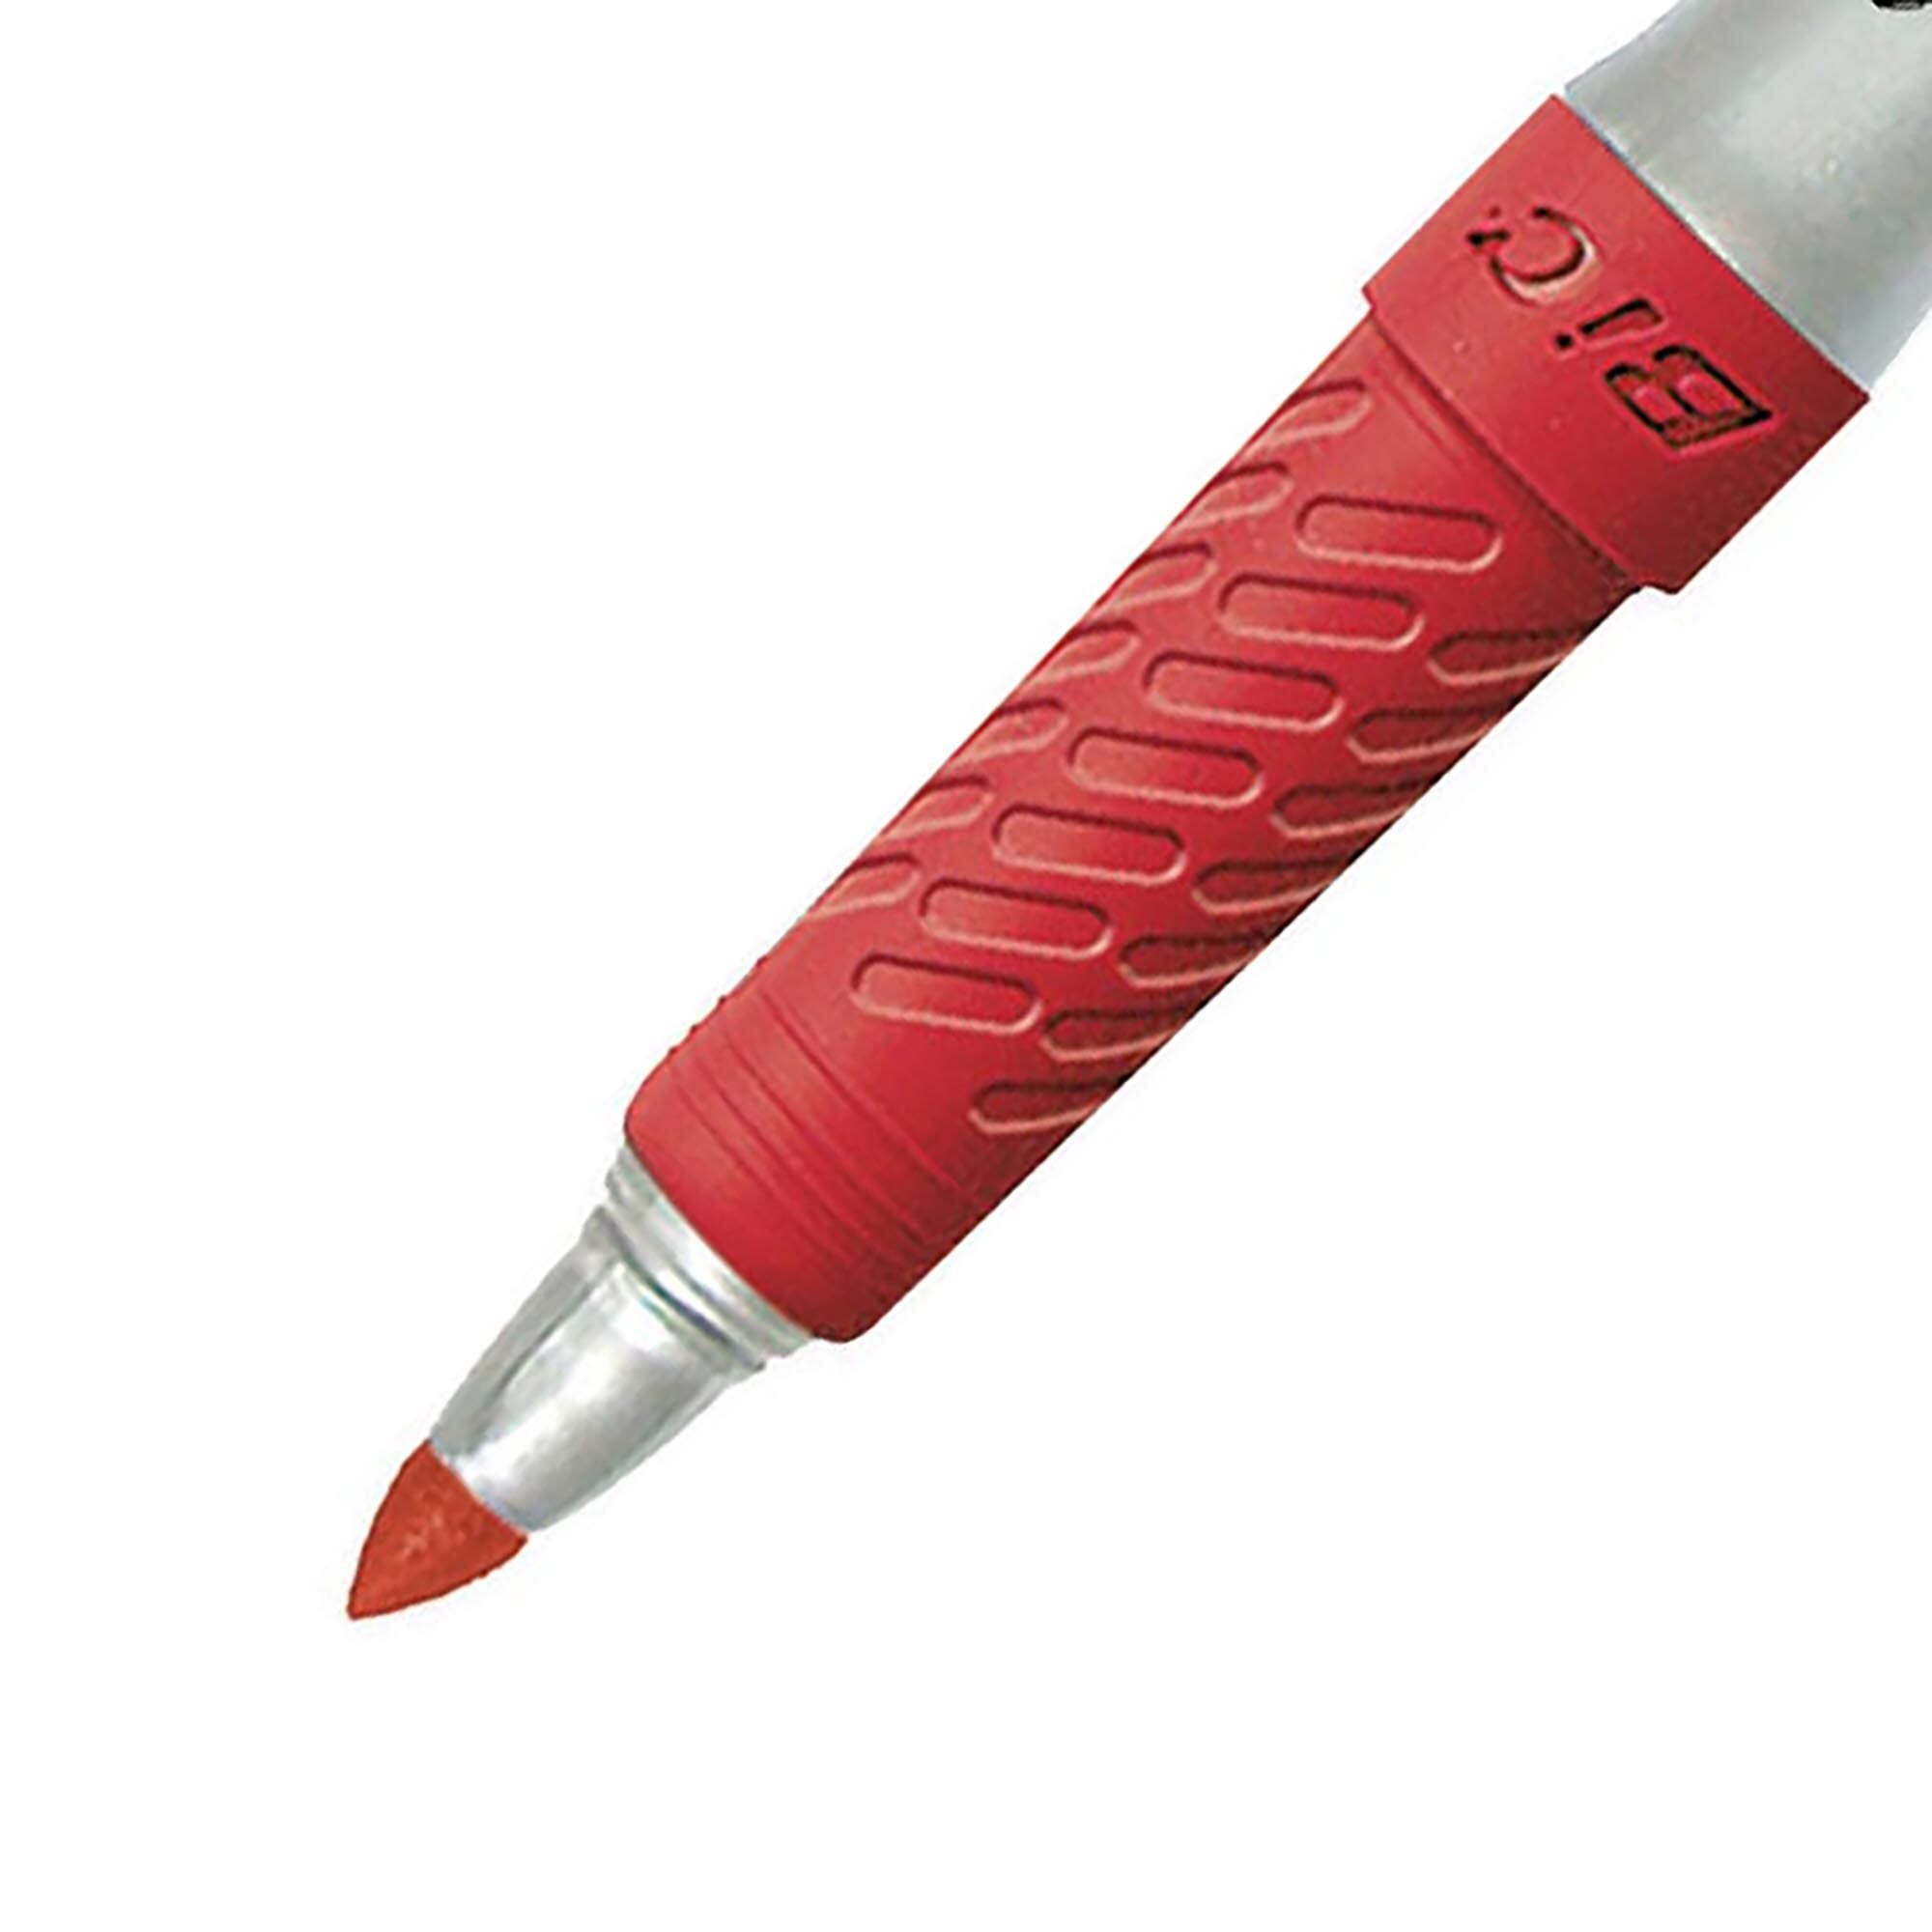 Comprar online Rotulador permanente M-30 A-Series rojo (AS0935). DISOFIC